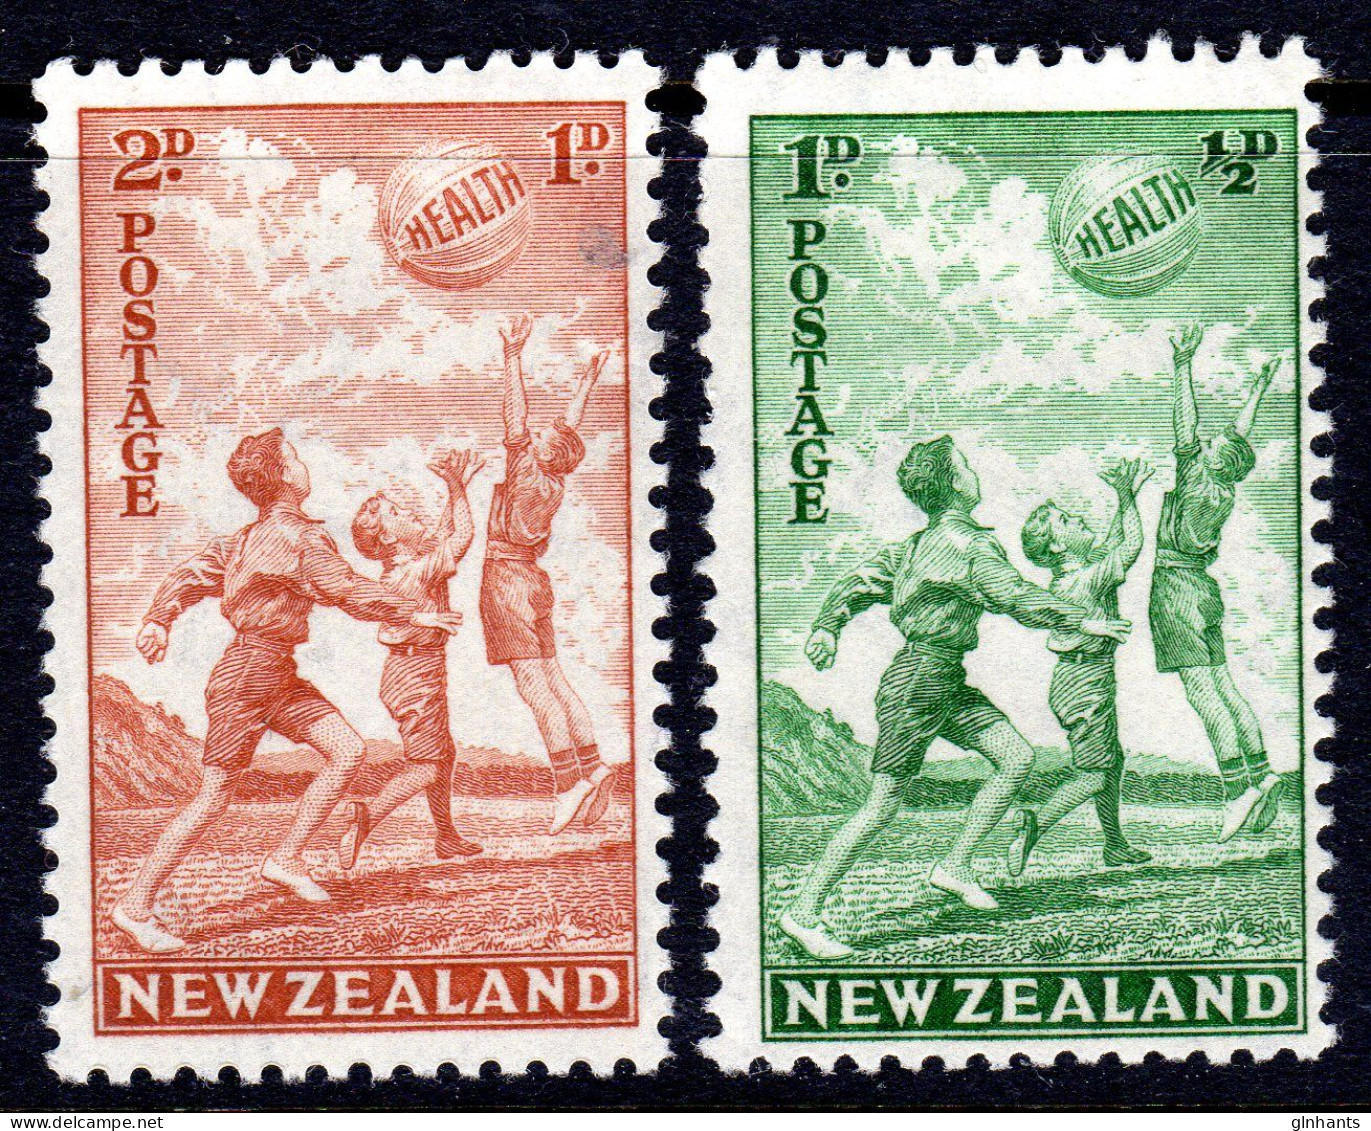 NEW ZEALAND NZ - 1940 HEALTH SET (2V) FINE MOUNTED MINT MM * SG 626-627 - Nuevos